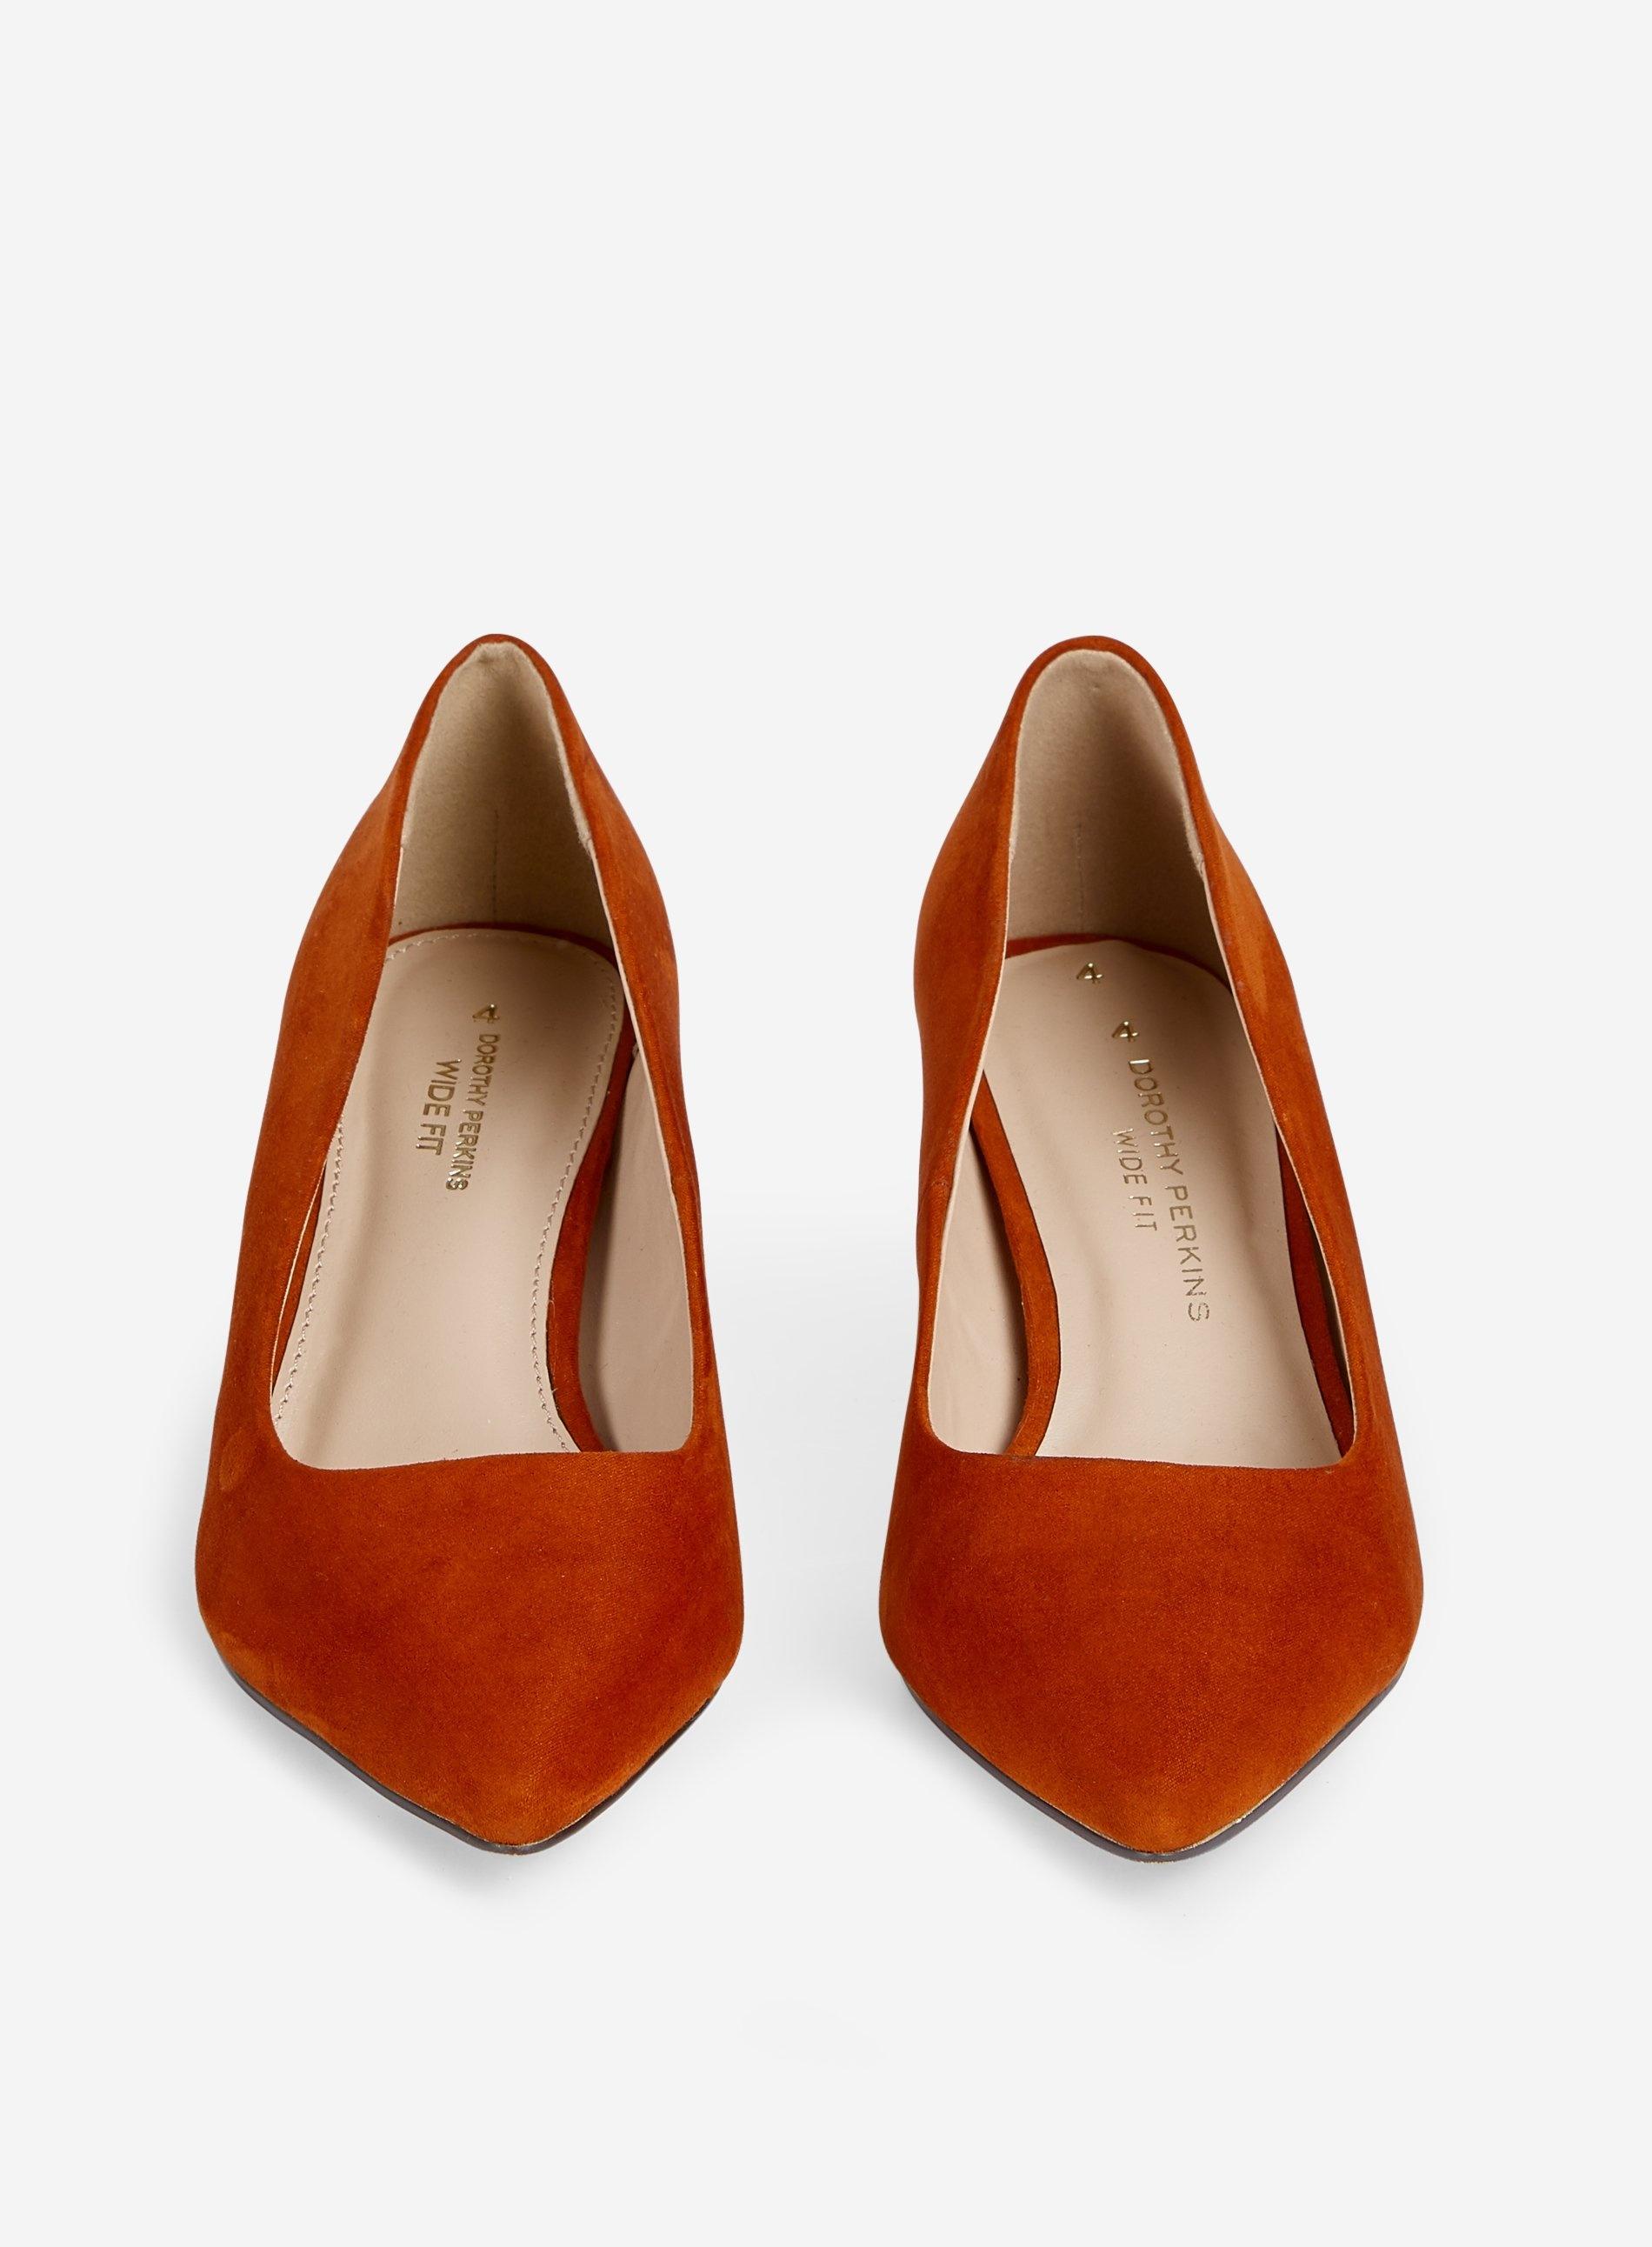 orange shoes dorothy perkins